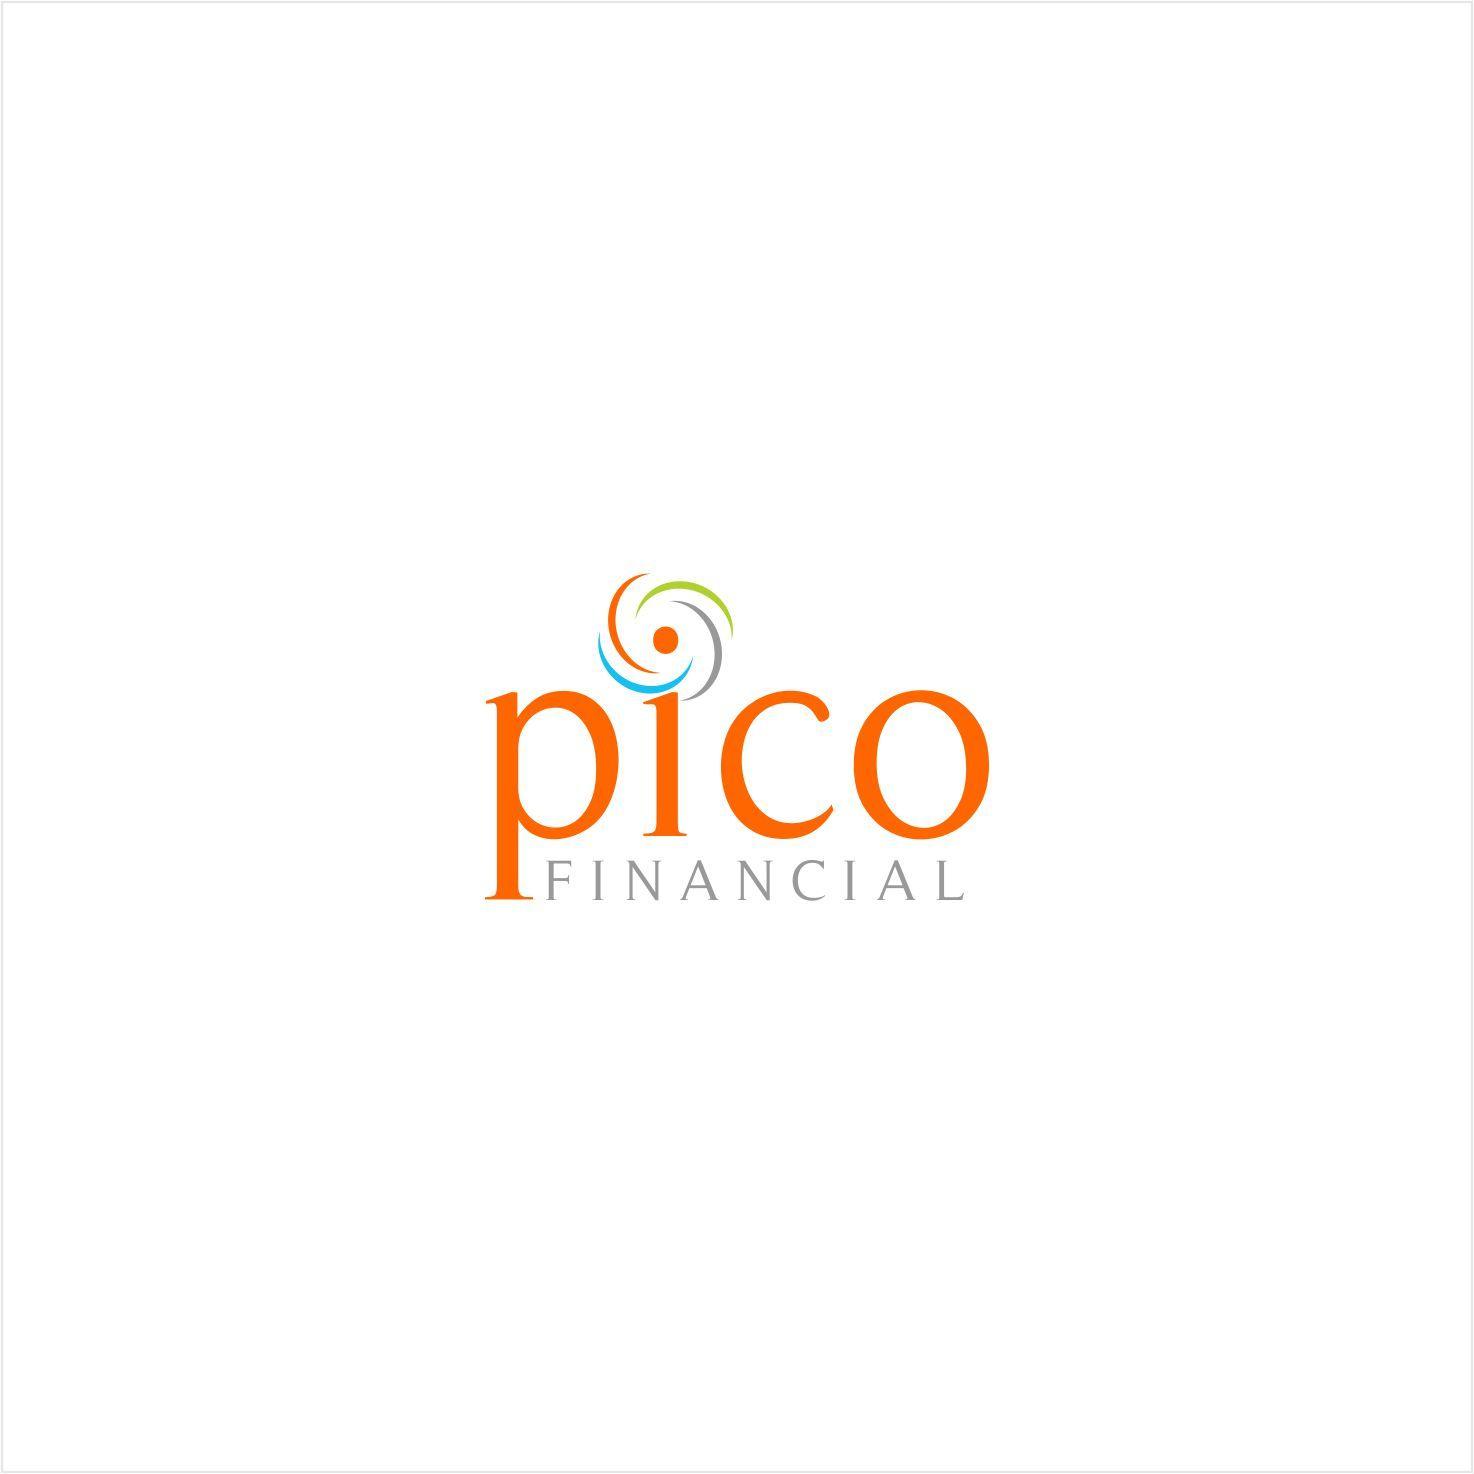 Pico Logo - Bold, Serious, Financial Logo Design for Pico Financial